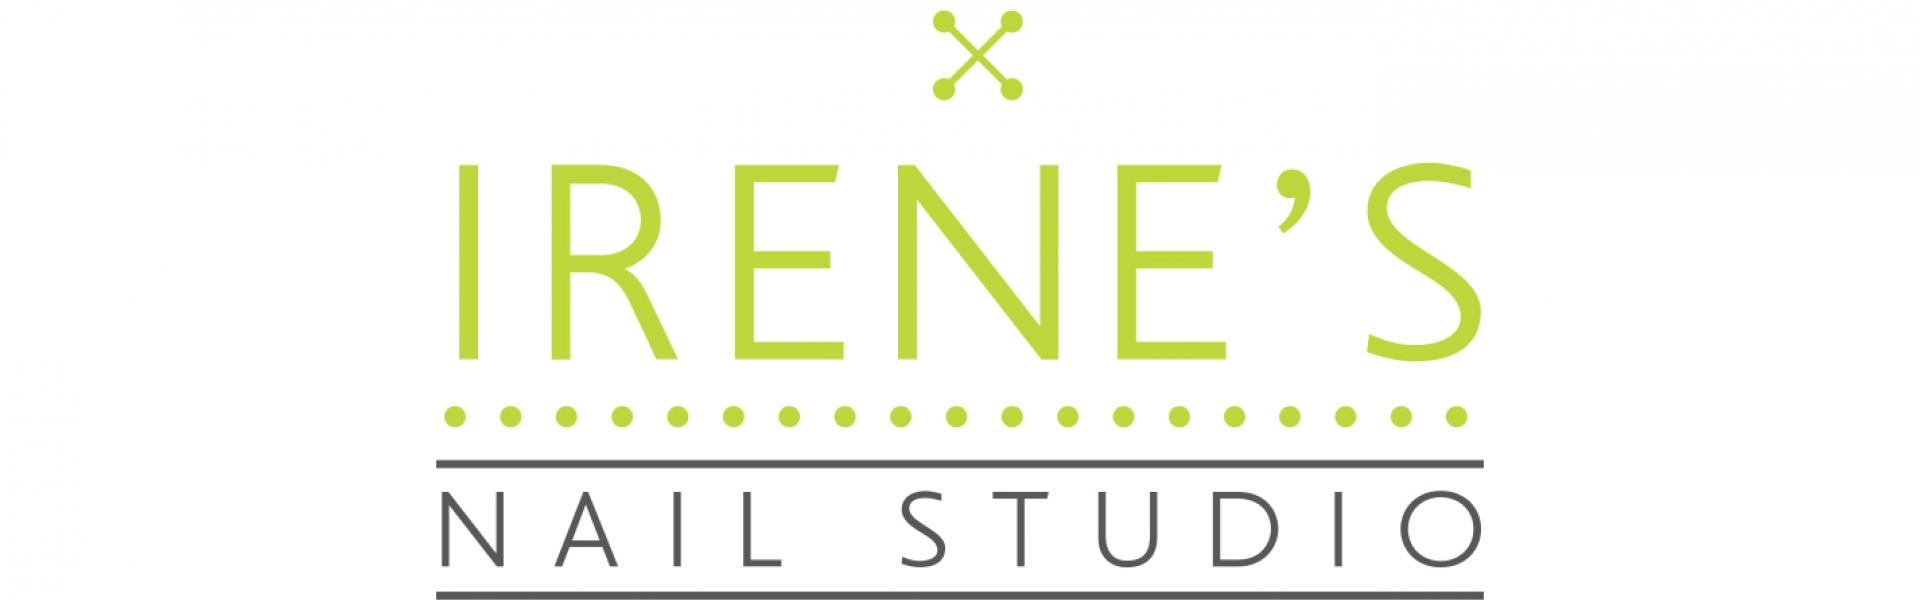 IRENE's NAIL STUDIO logo